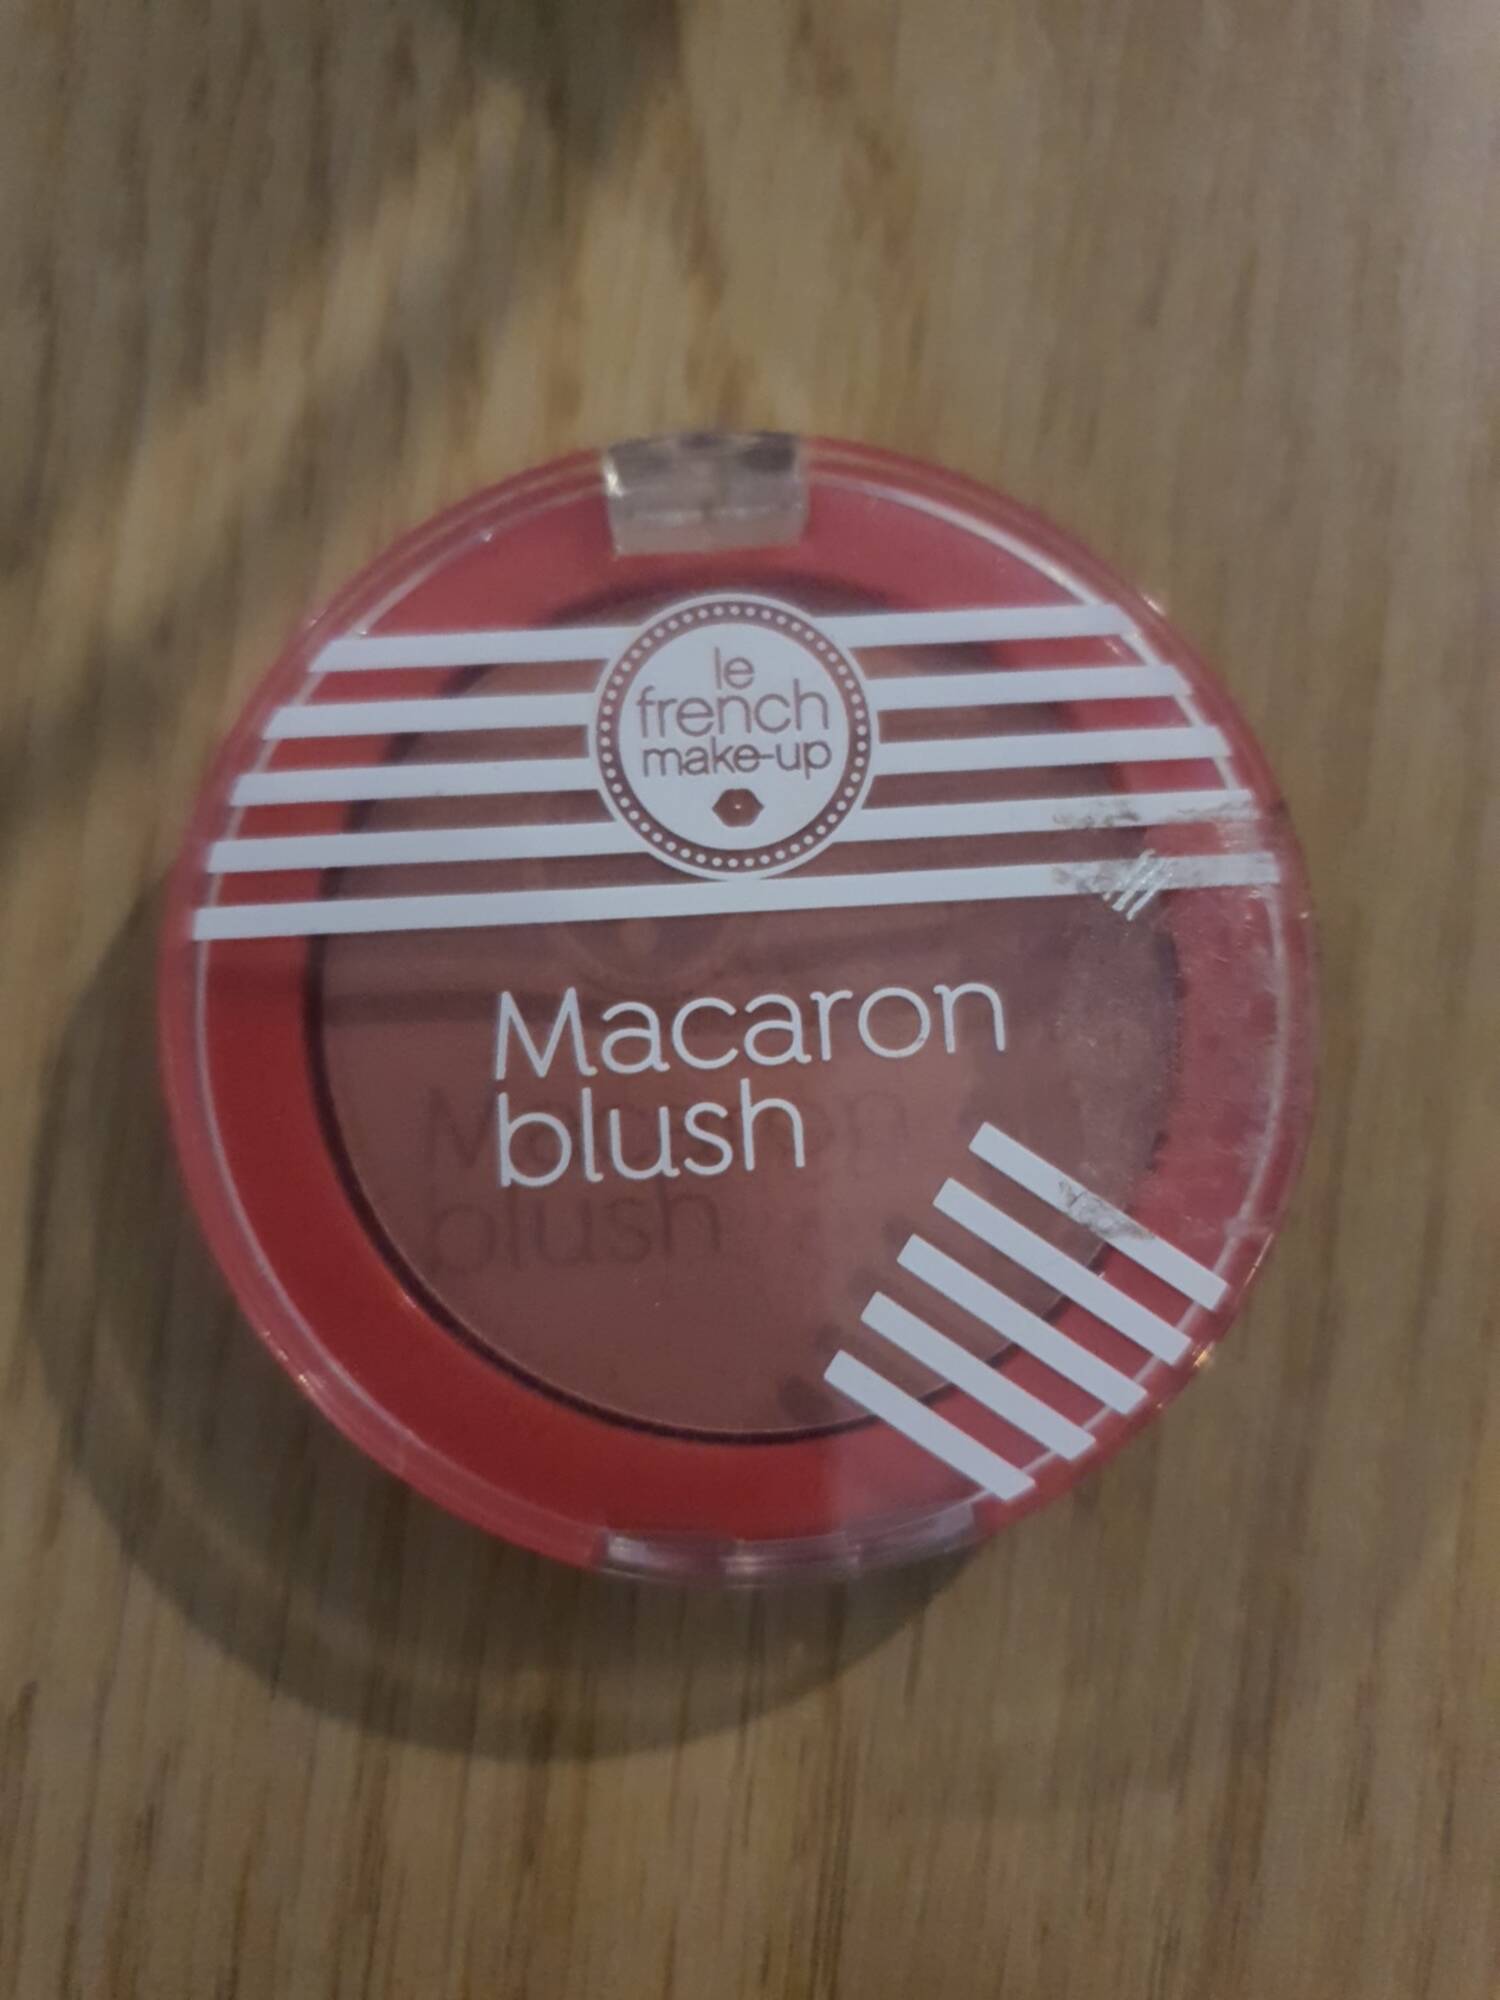 LE FRENCH MAKE-UP - Macaron blush 06 prune rafinée